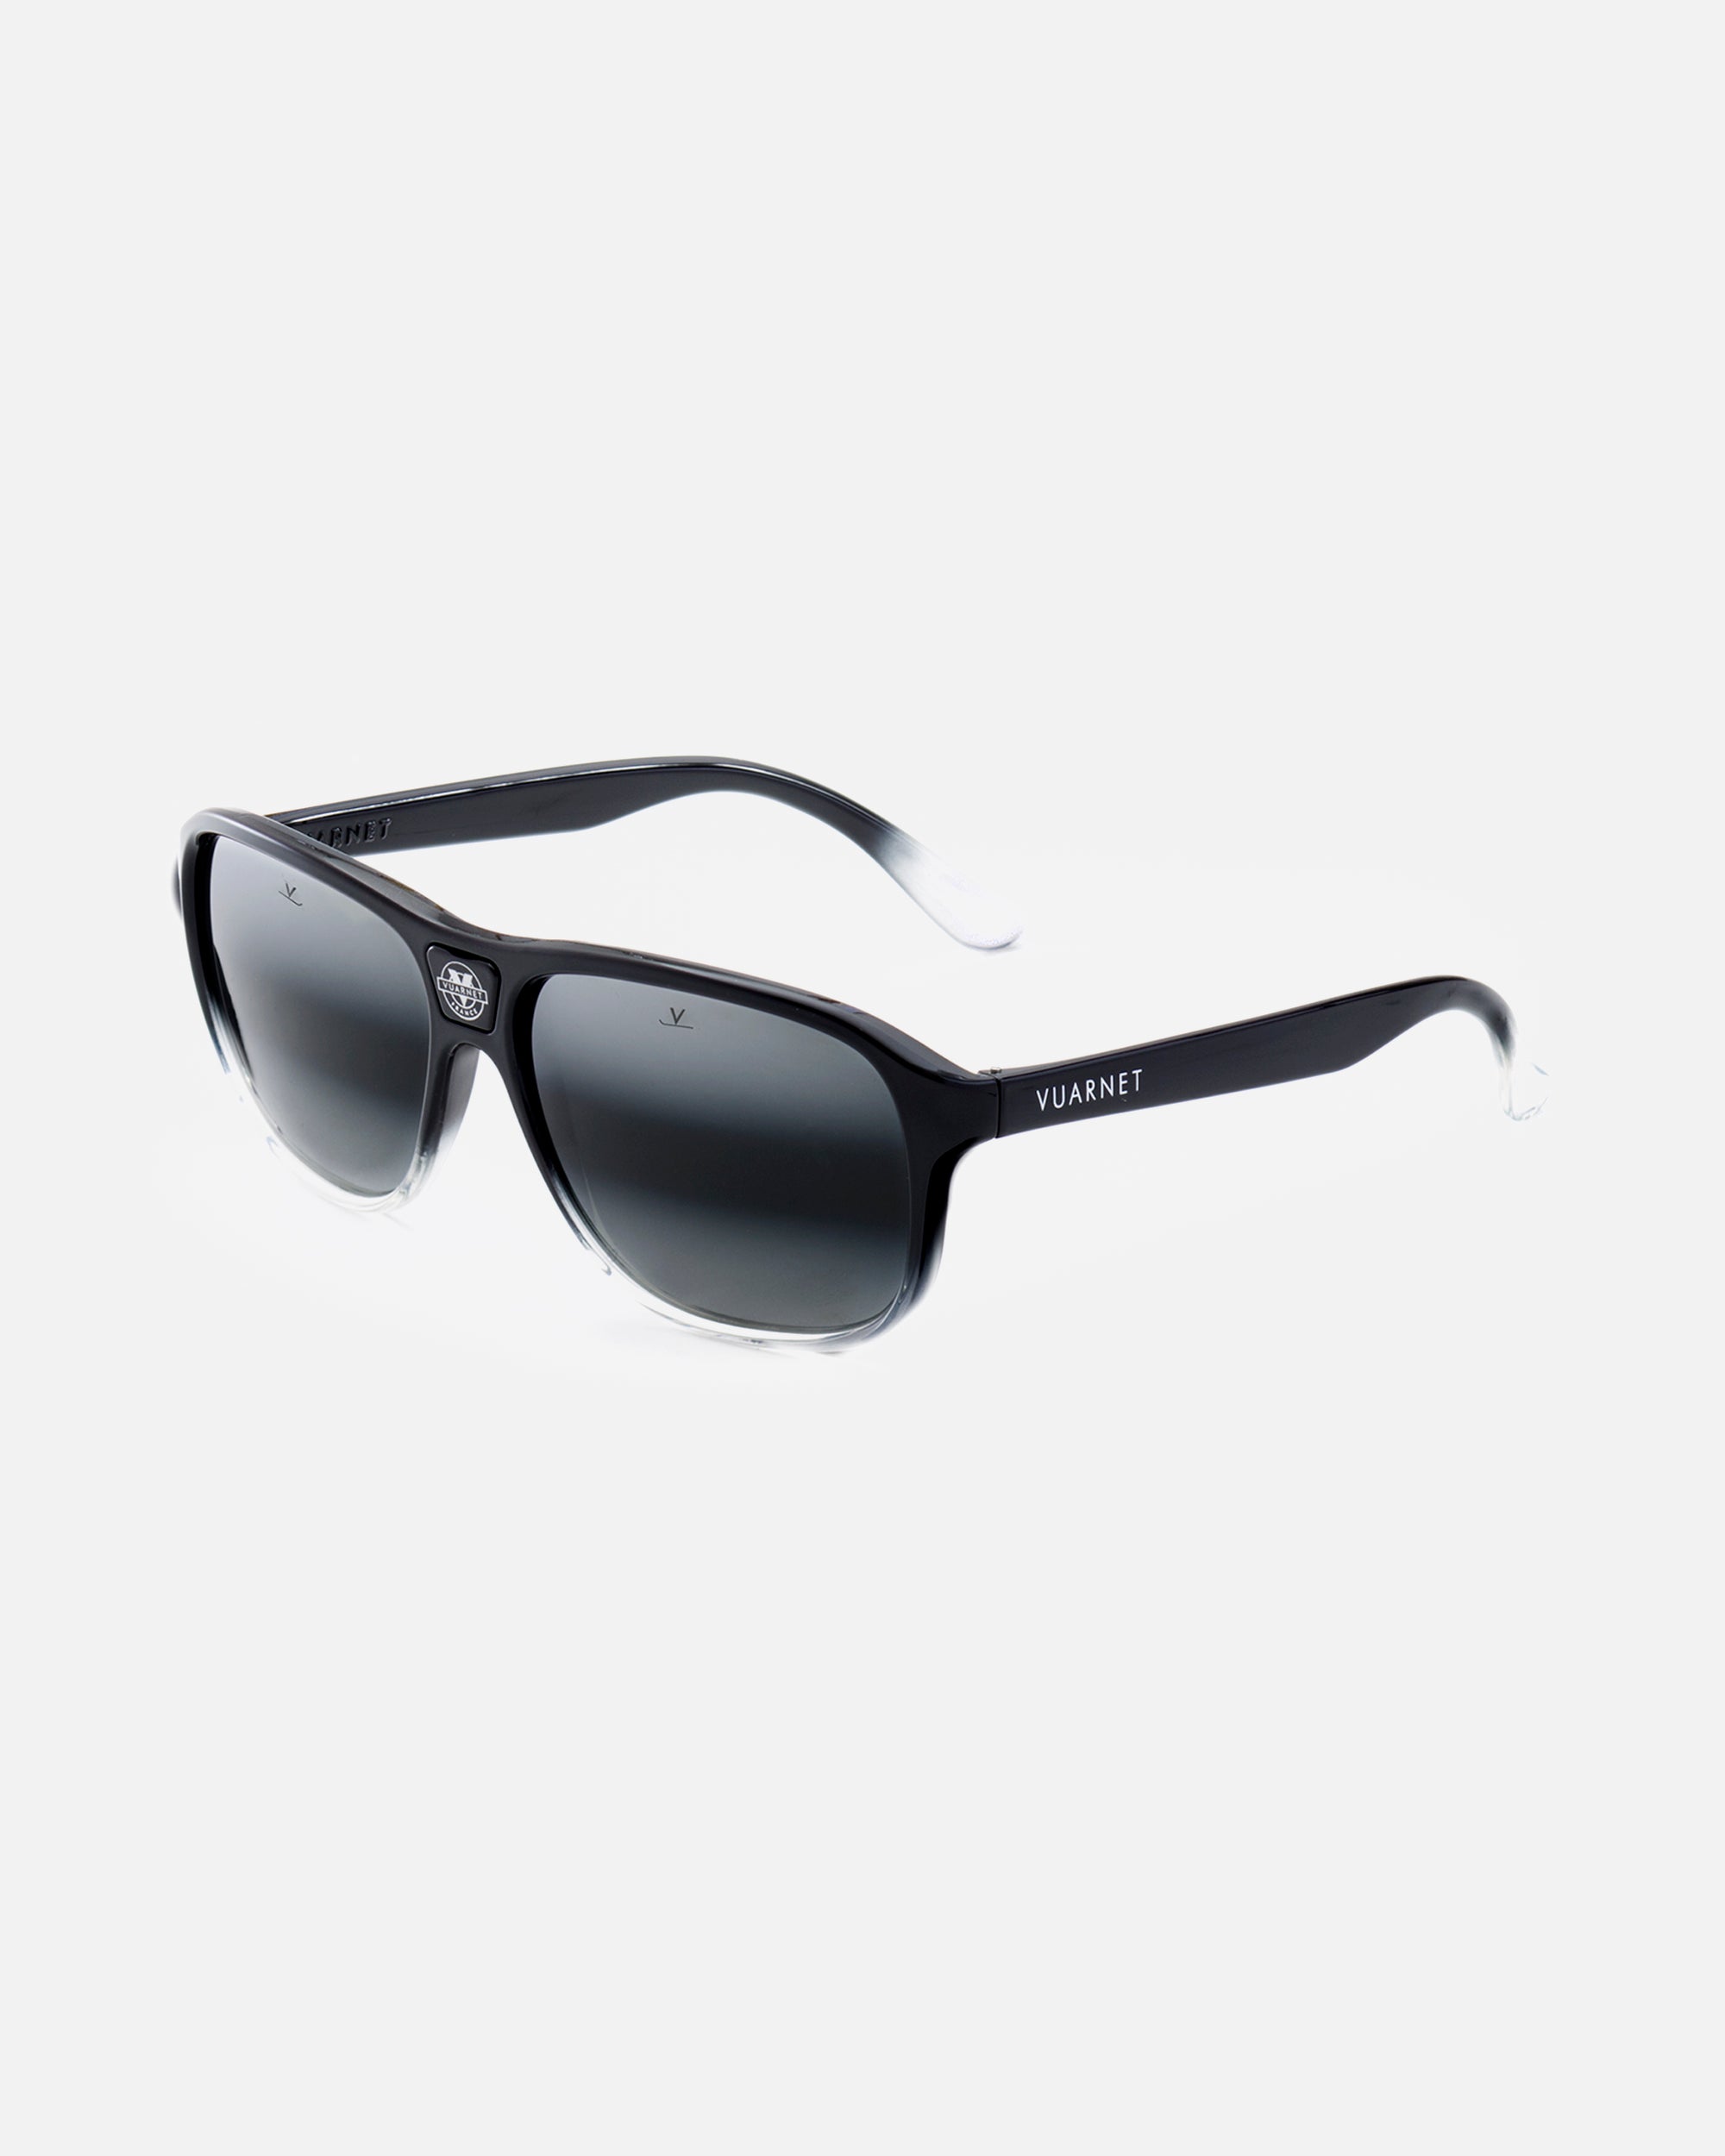 Vuarnet Black LEGEND 03 ORIGINALS Lifestyle Sunglasses